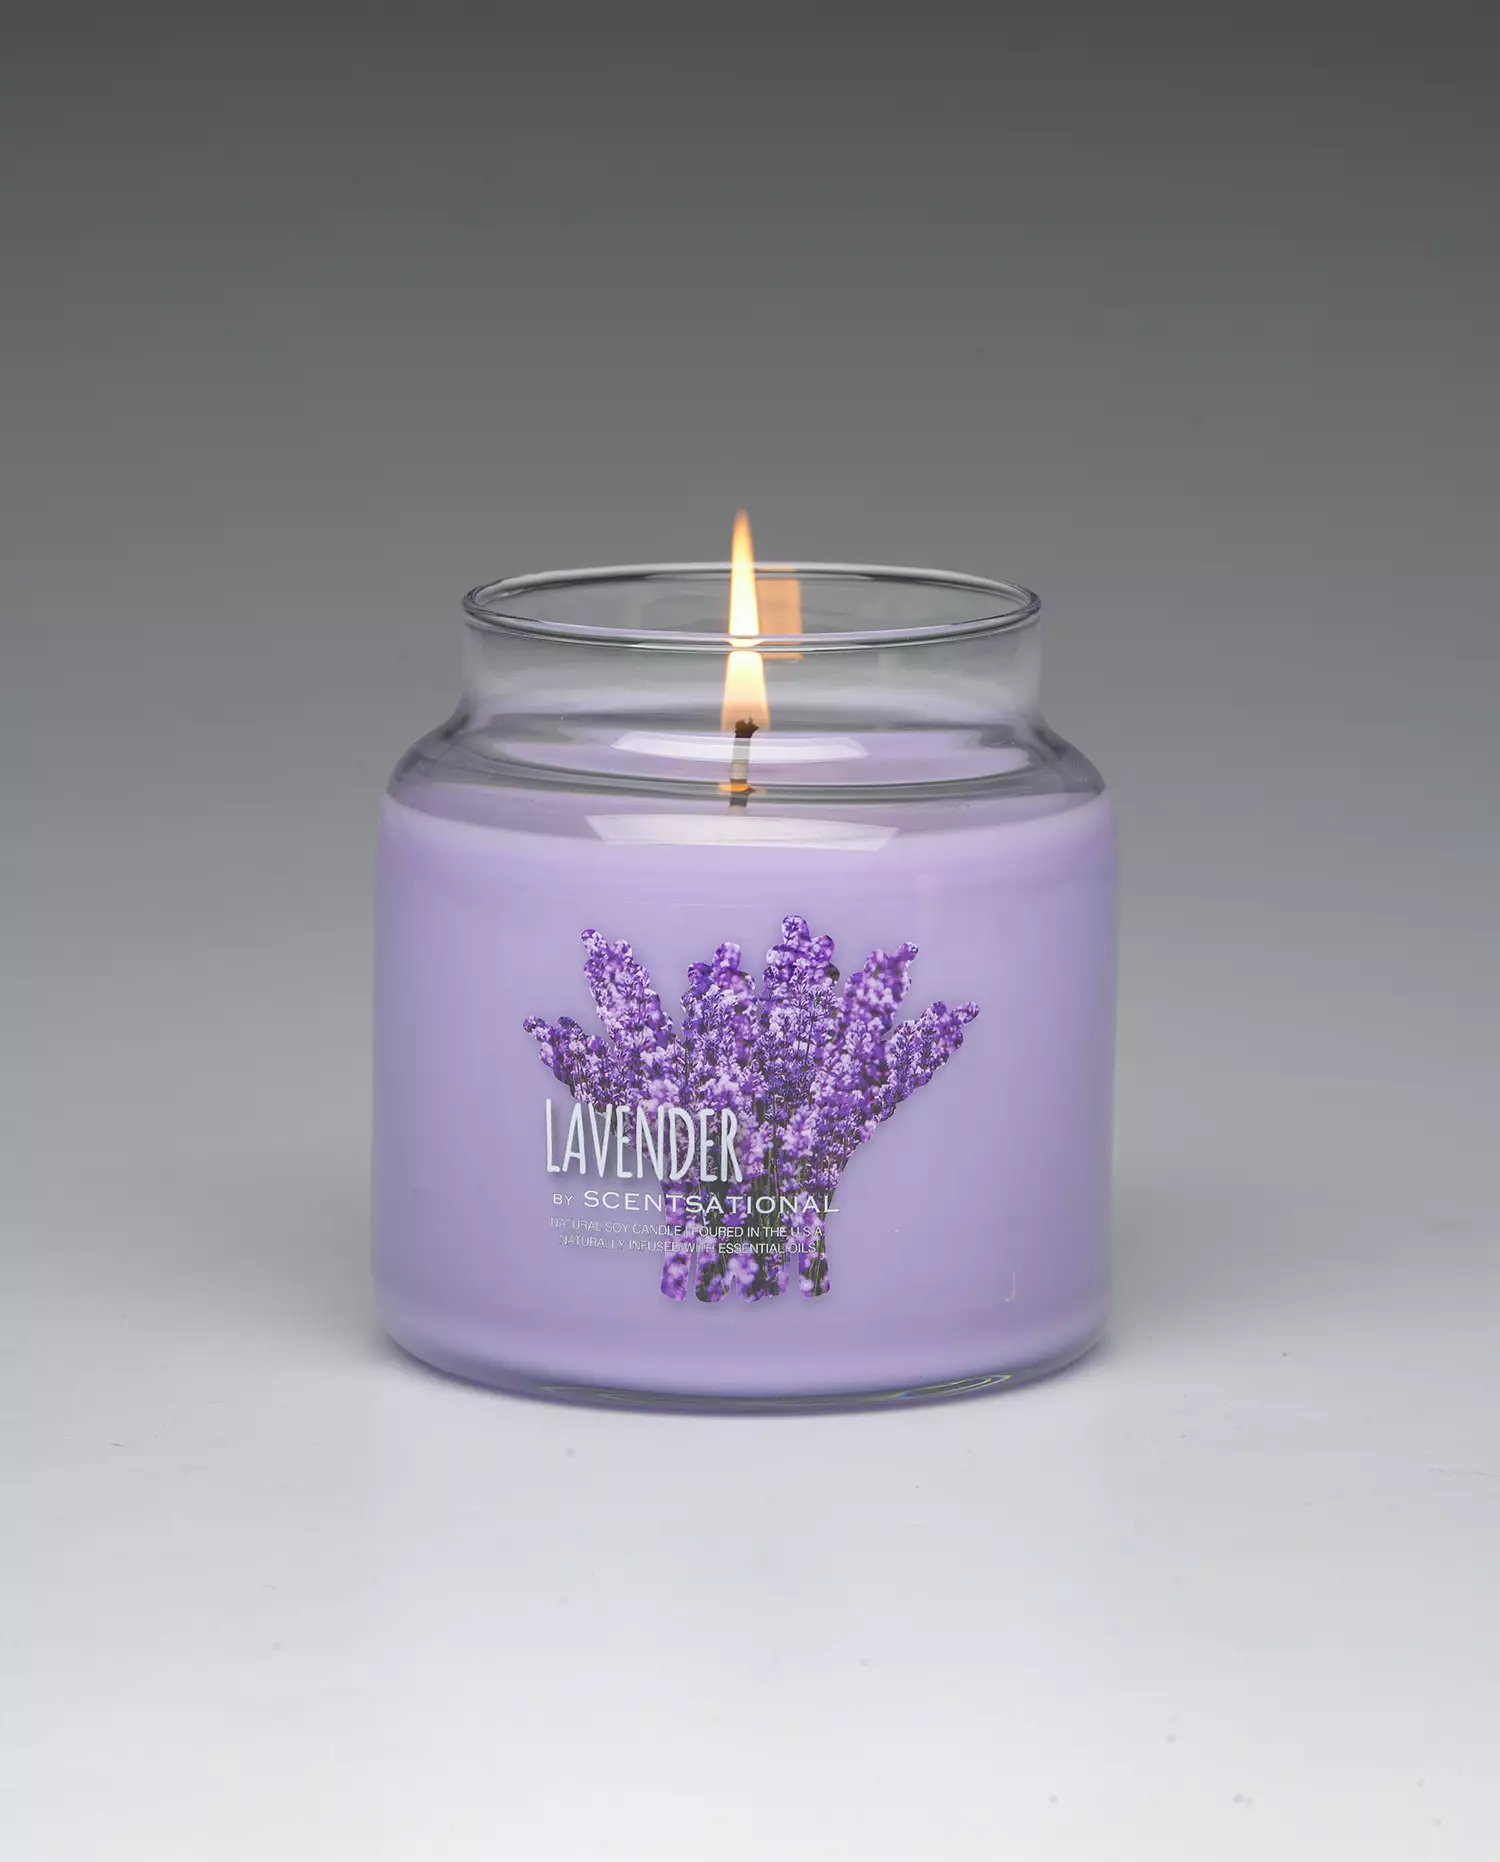 Lavender 11oz scented candle burning